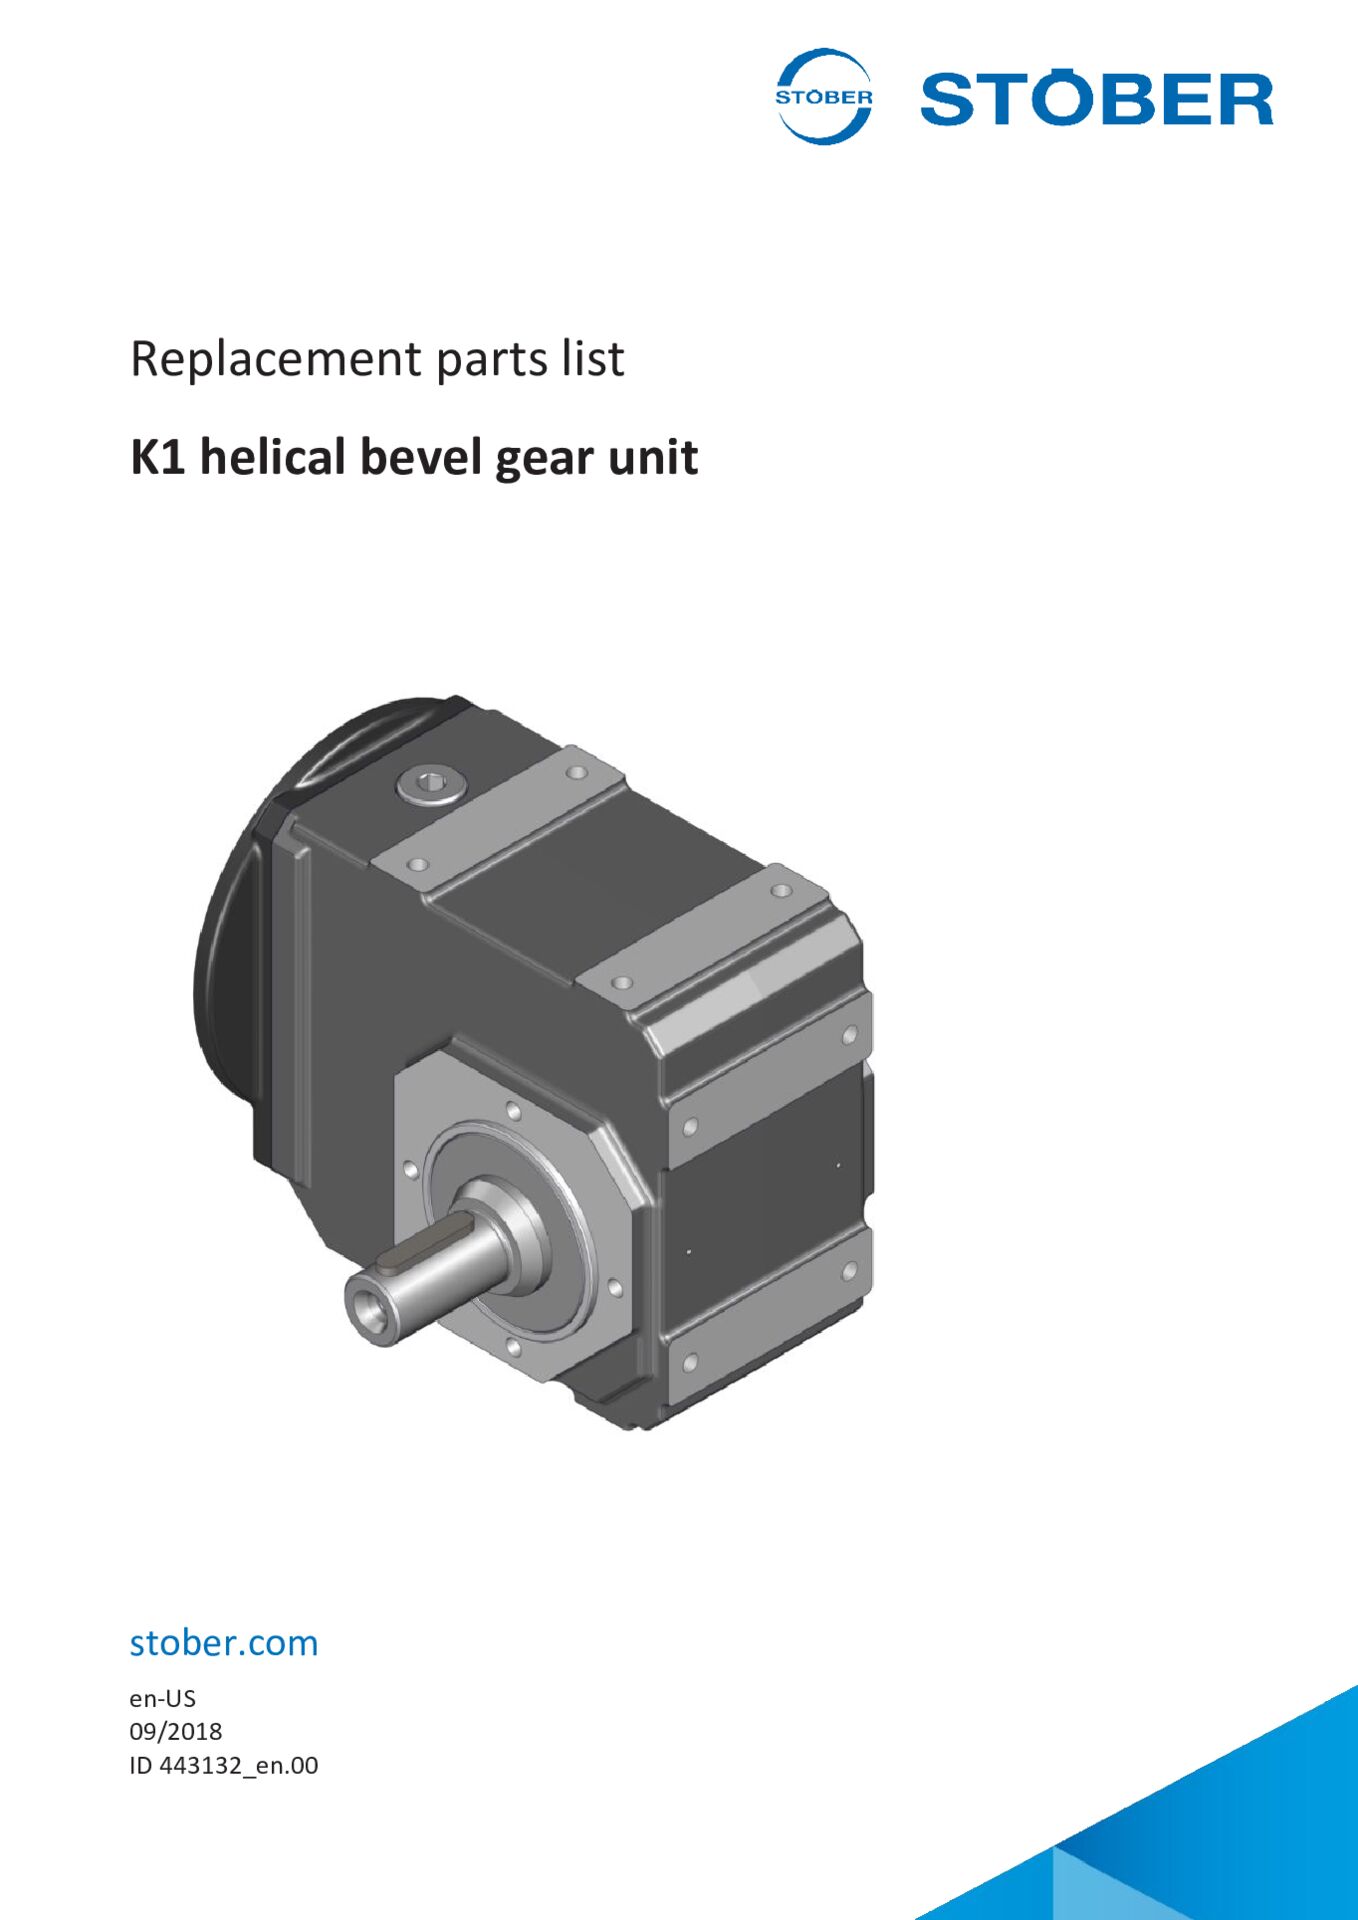 Replacement parts list K1 helical bevel gear unit